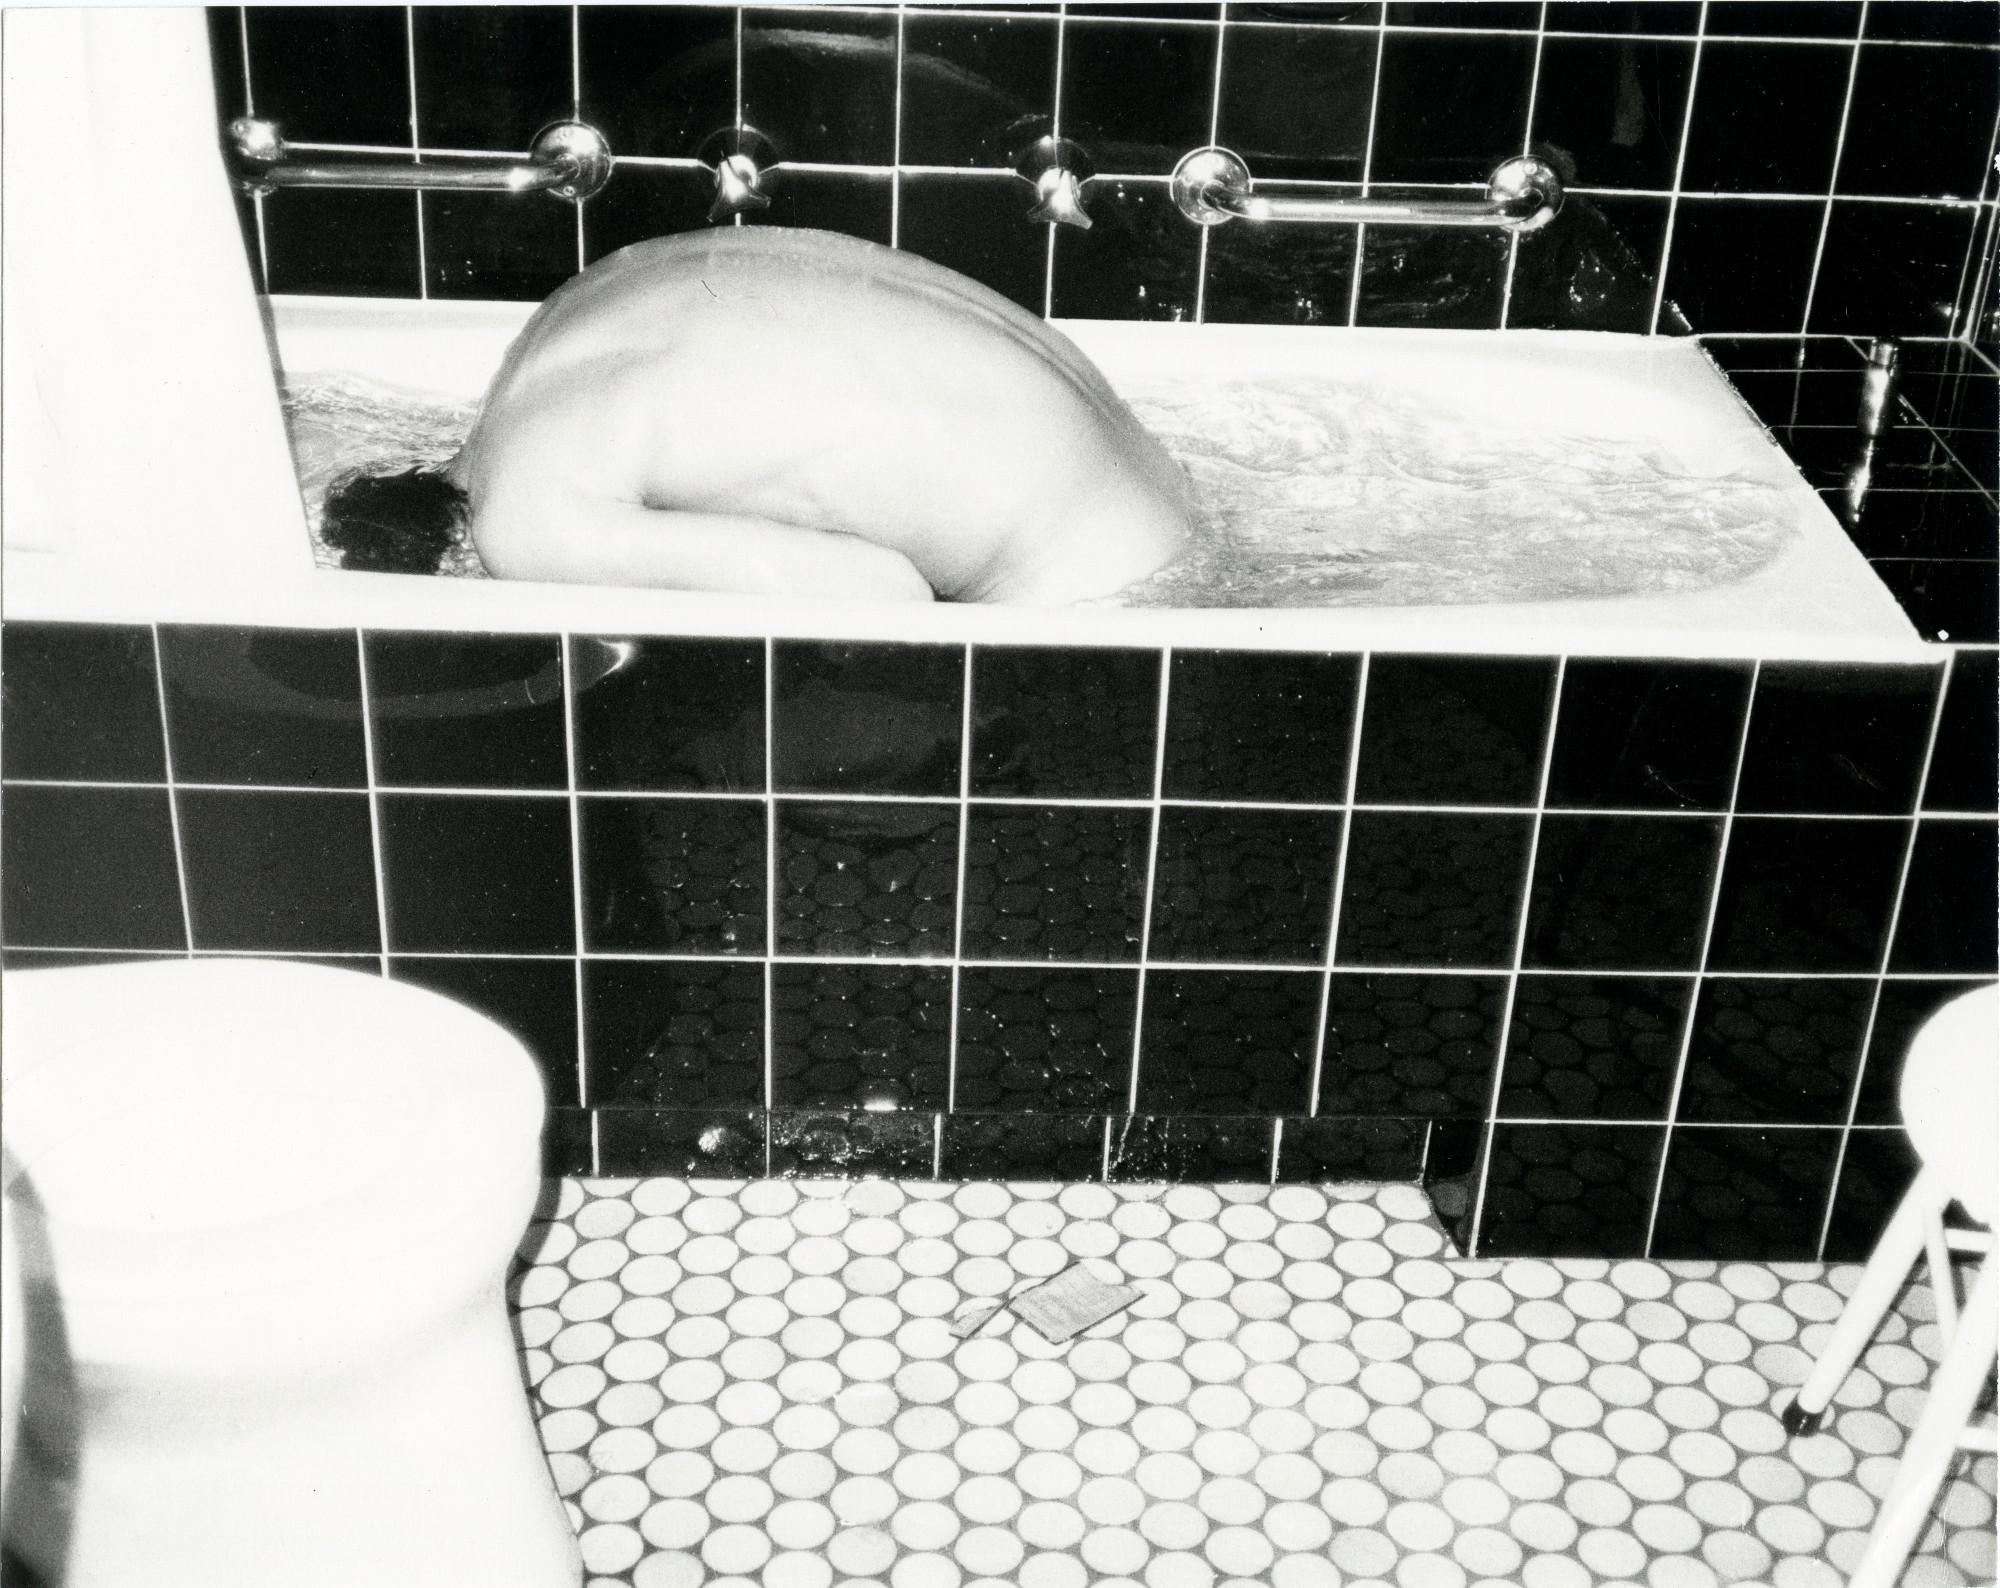 Andy Warhol Nude Photograph - Male Nude Model in Bathtub